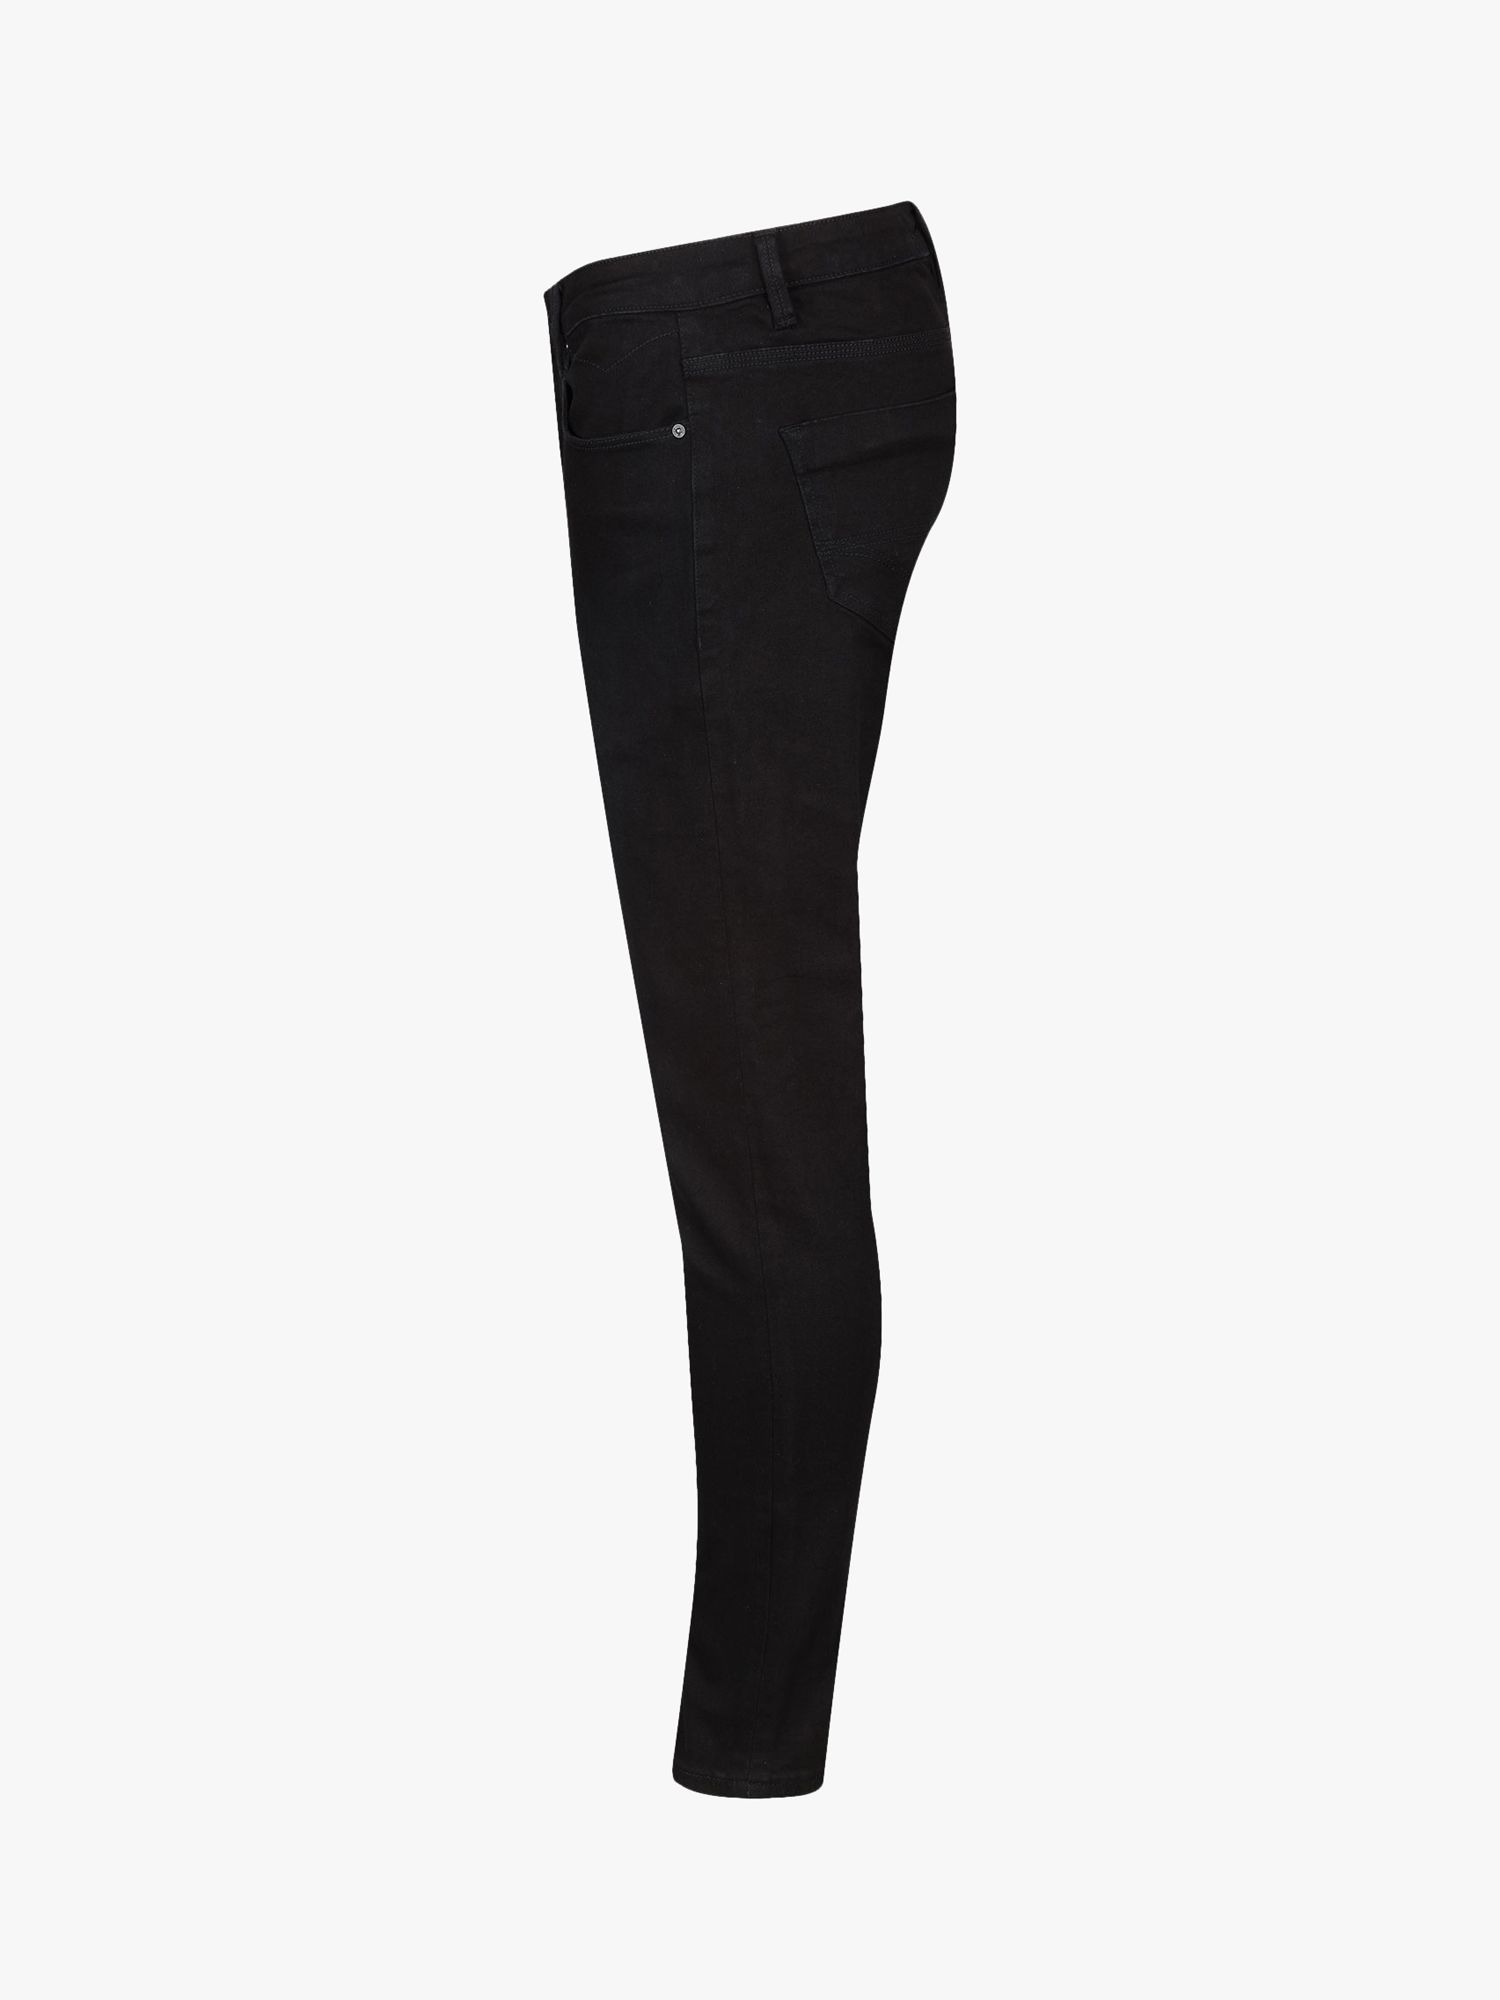 LUKE 1977 Vacuum Demin Slim Fit Jeans, Black Worn, 28R